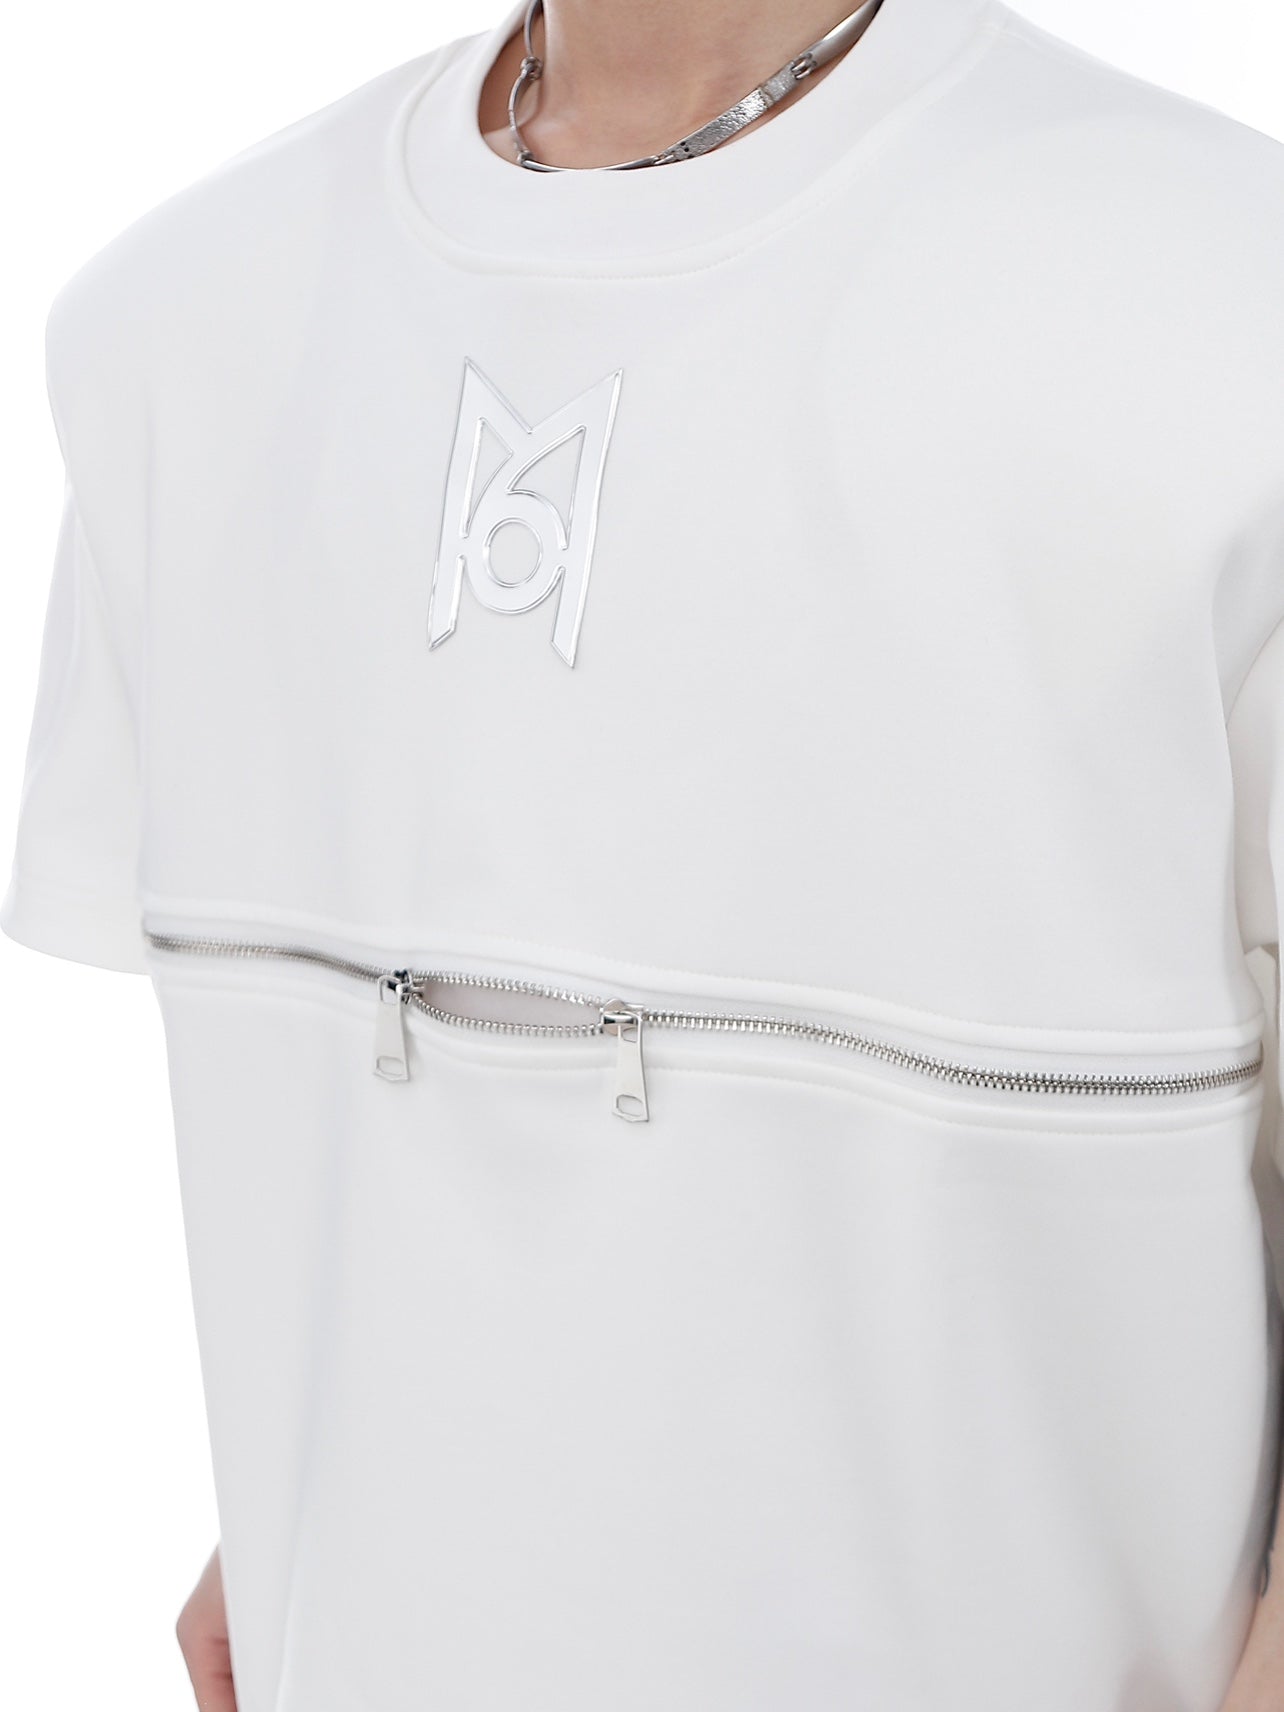 【23s Feb.】Shoulder Padded Cross-Cut with Zip Shirt